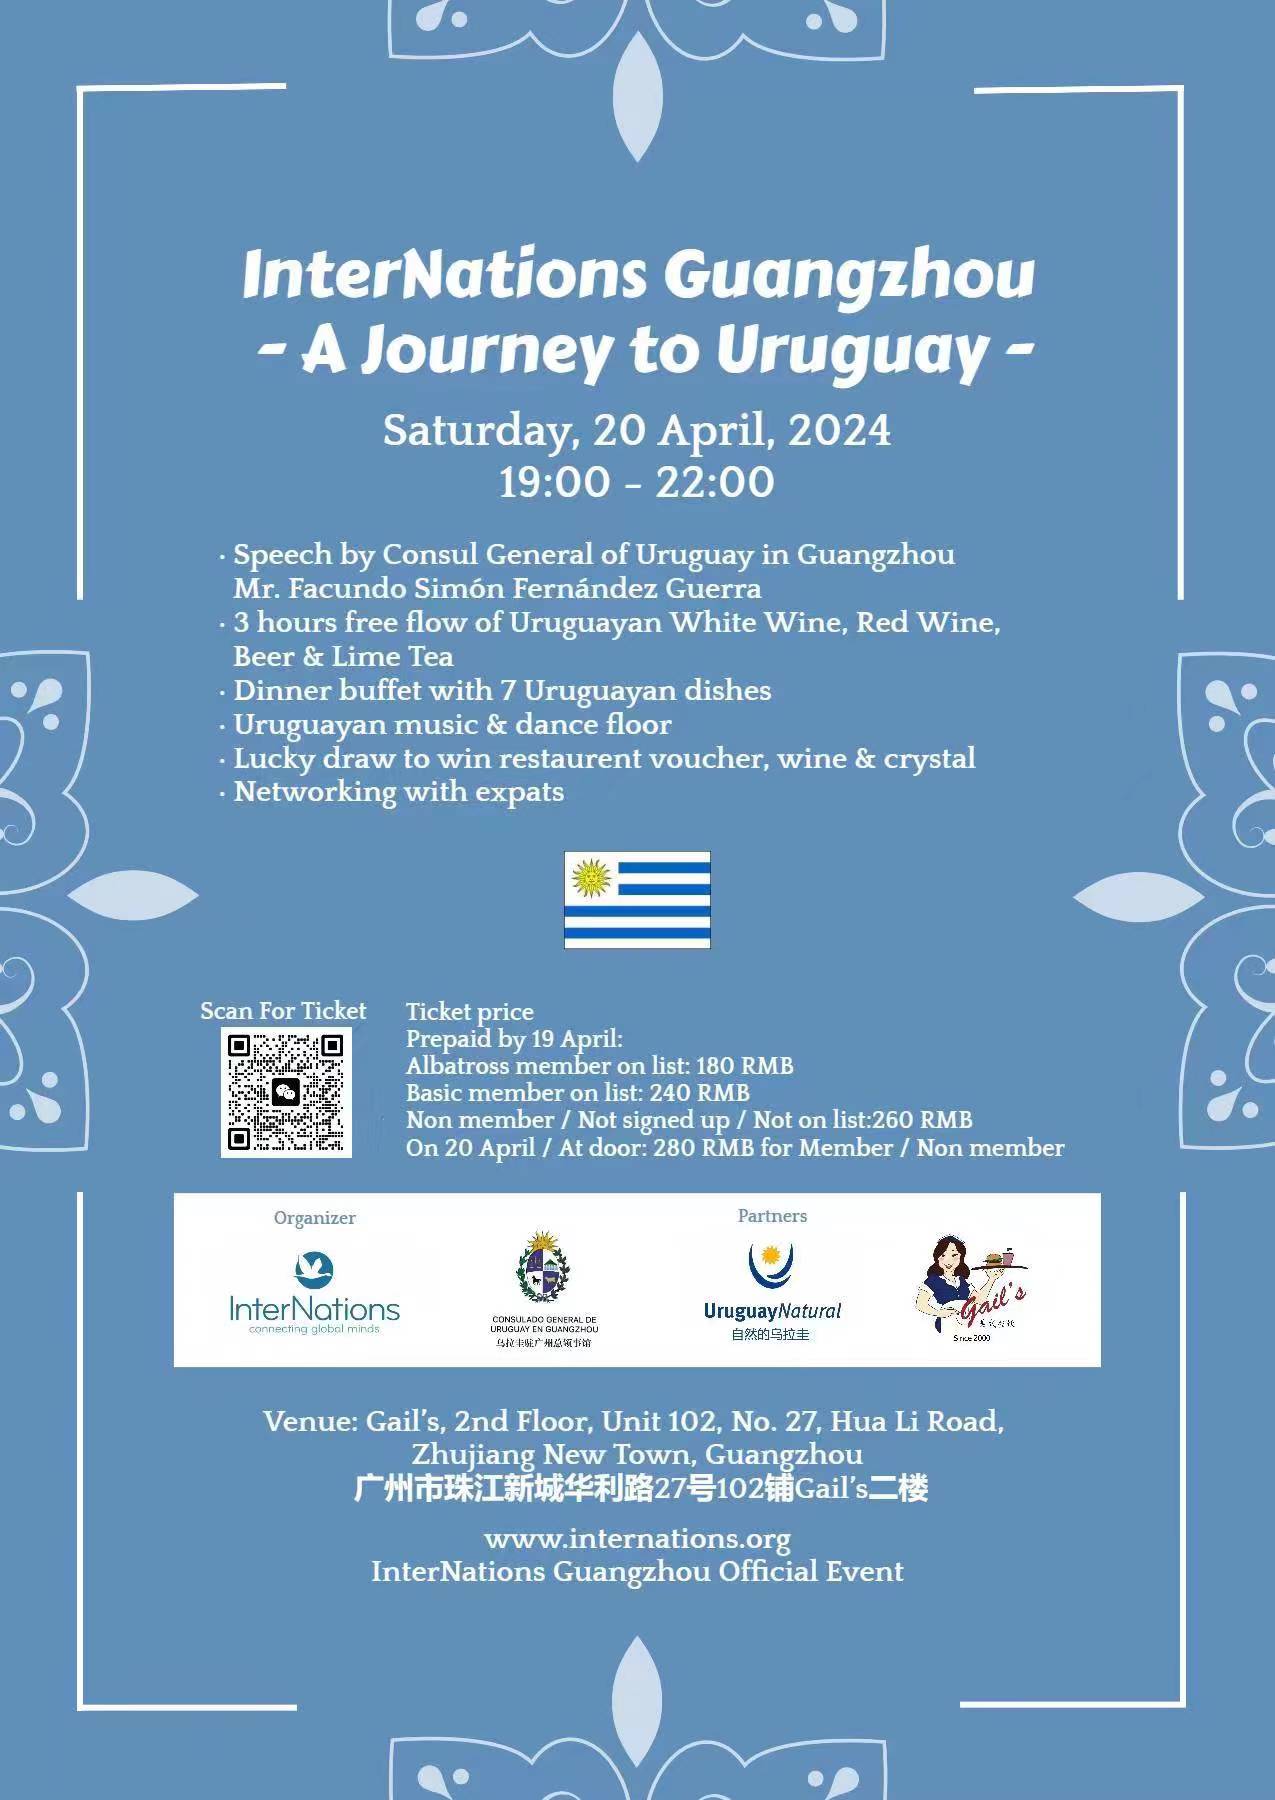 InterNations-Guangzhou-A-Journey-to-Uruguay.jpg